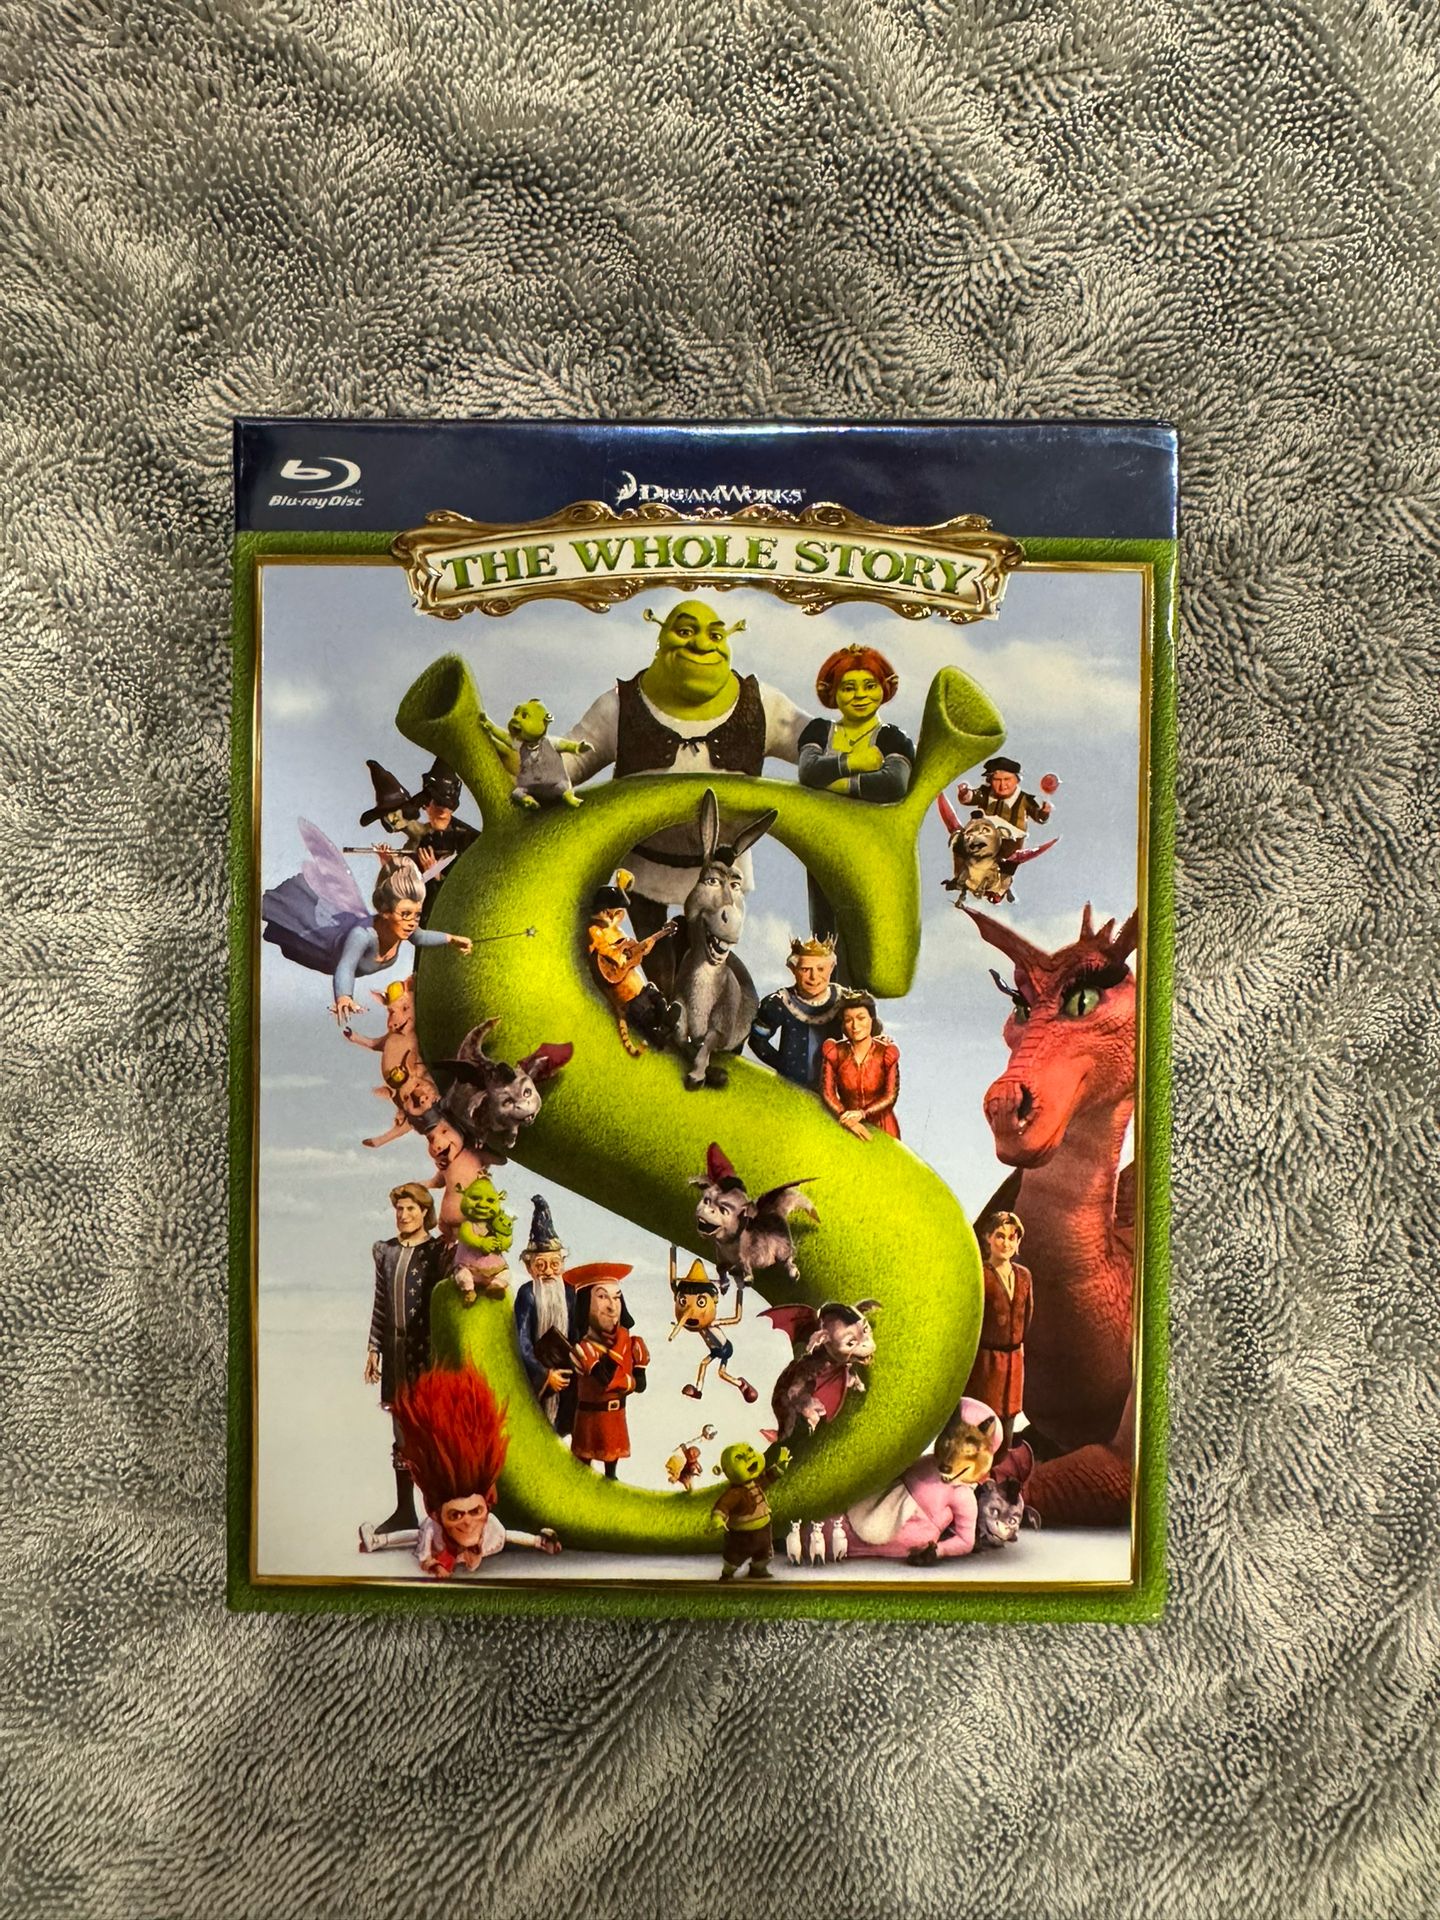 Shrek 4 Movie BlueRay Collection